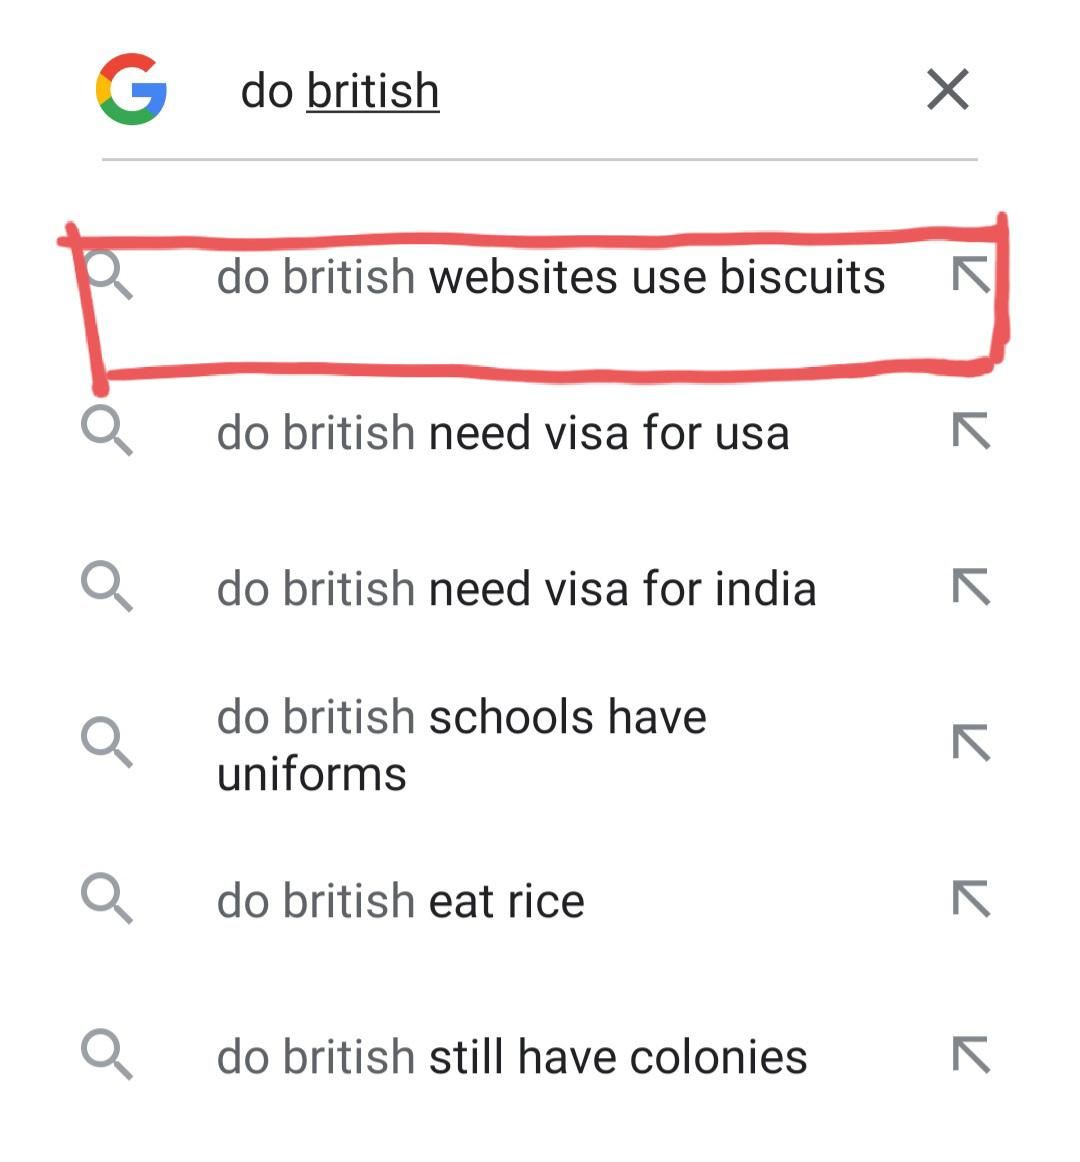 Internet Search